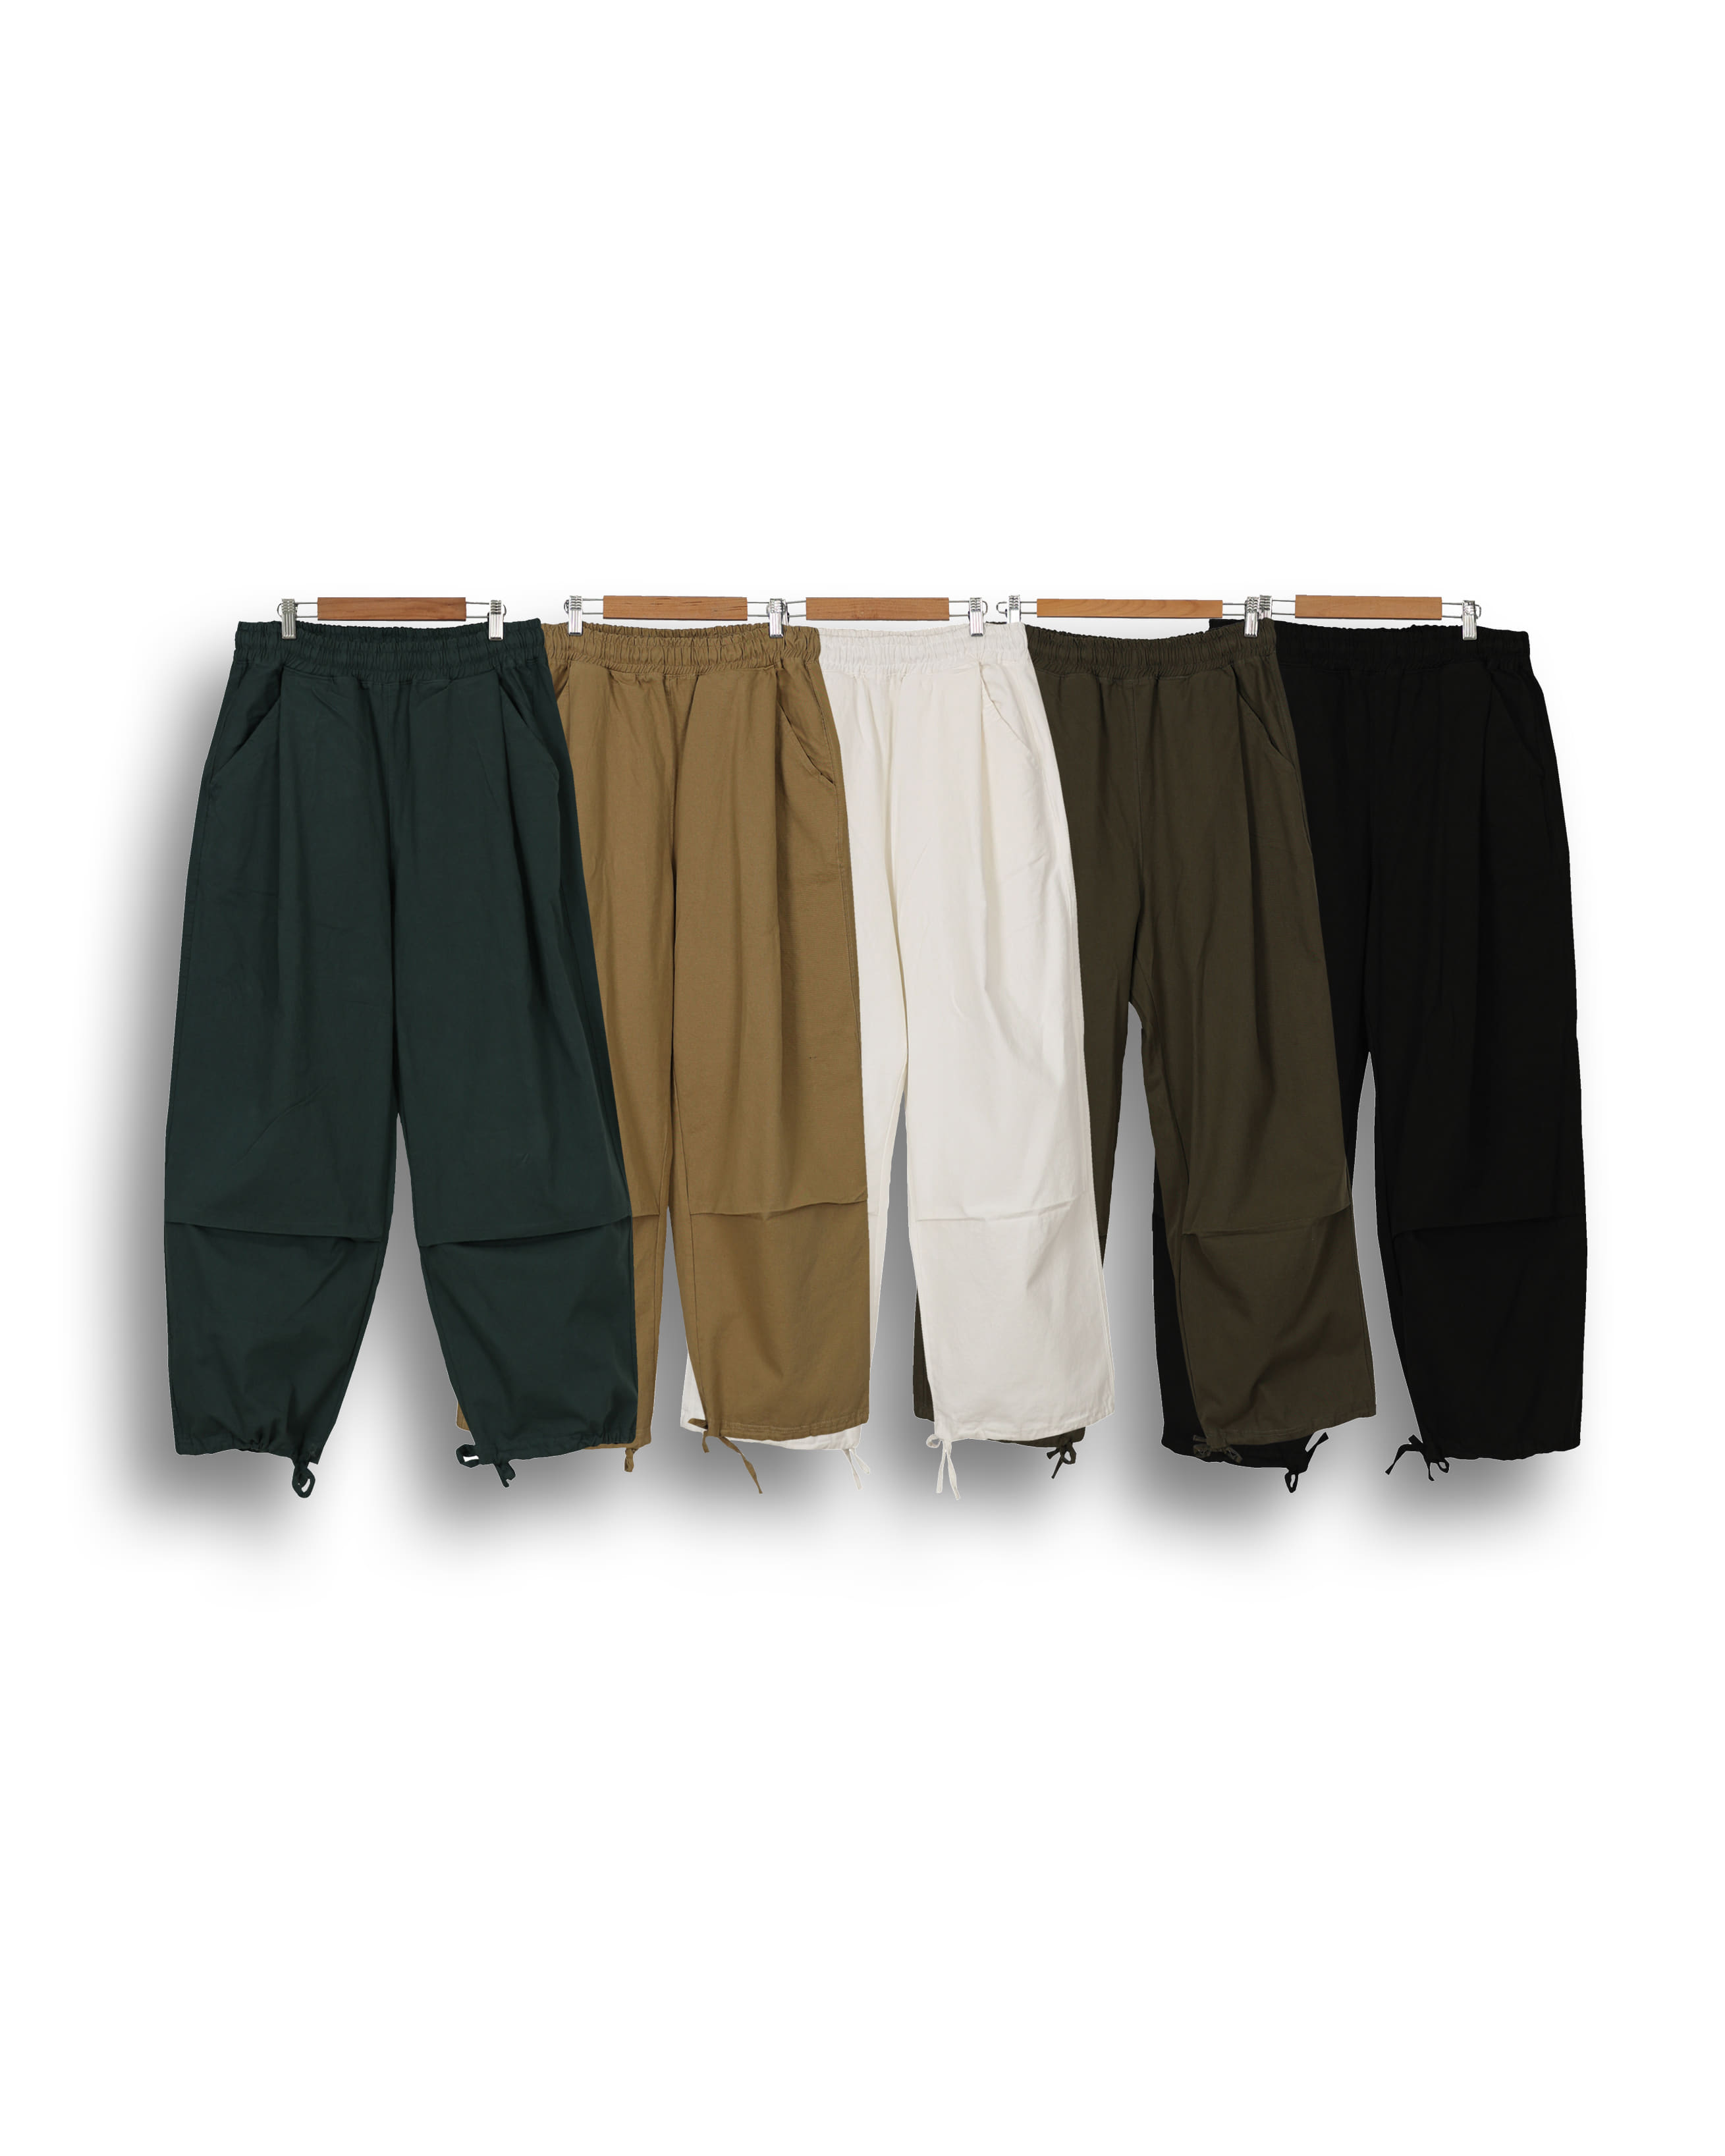 PEO S340 Mil Pleats Cargo Pants (Black/Khaki/Beige/Green/White)